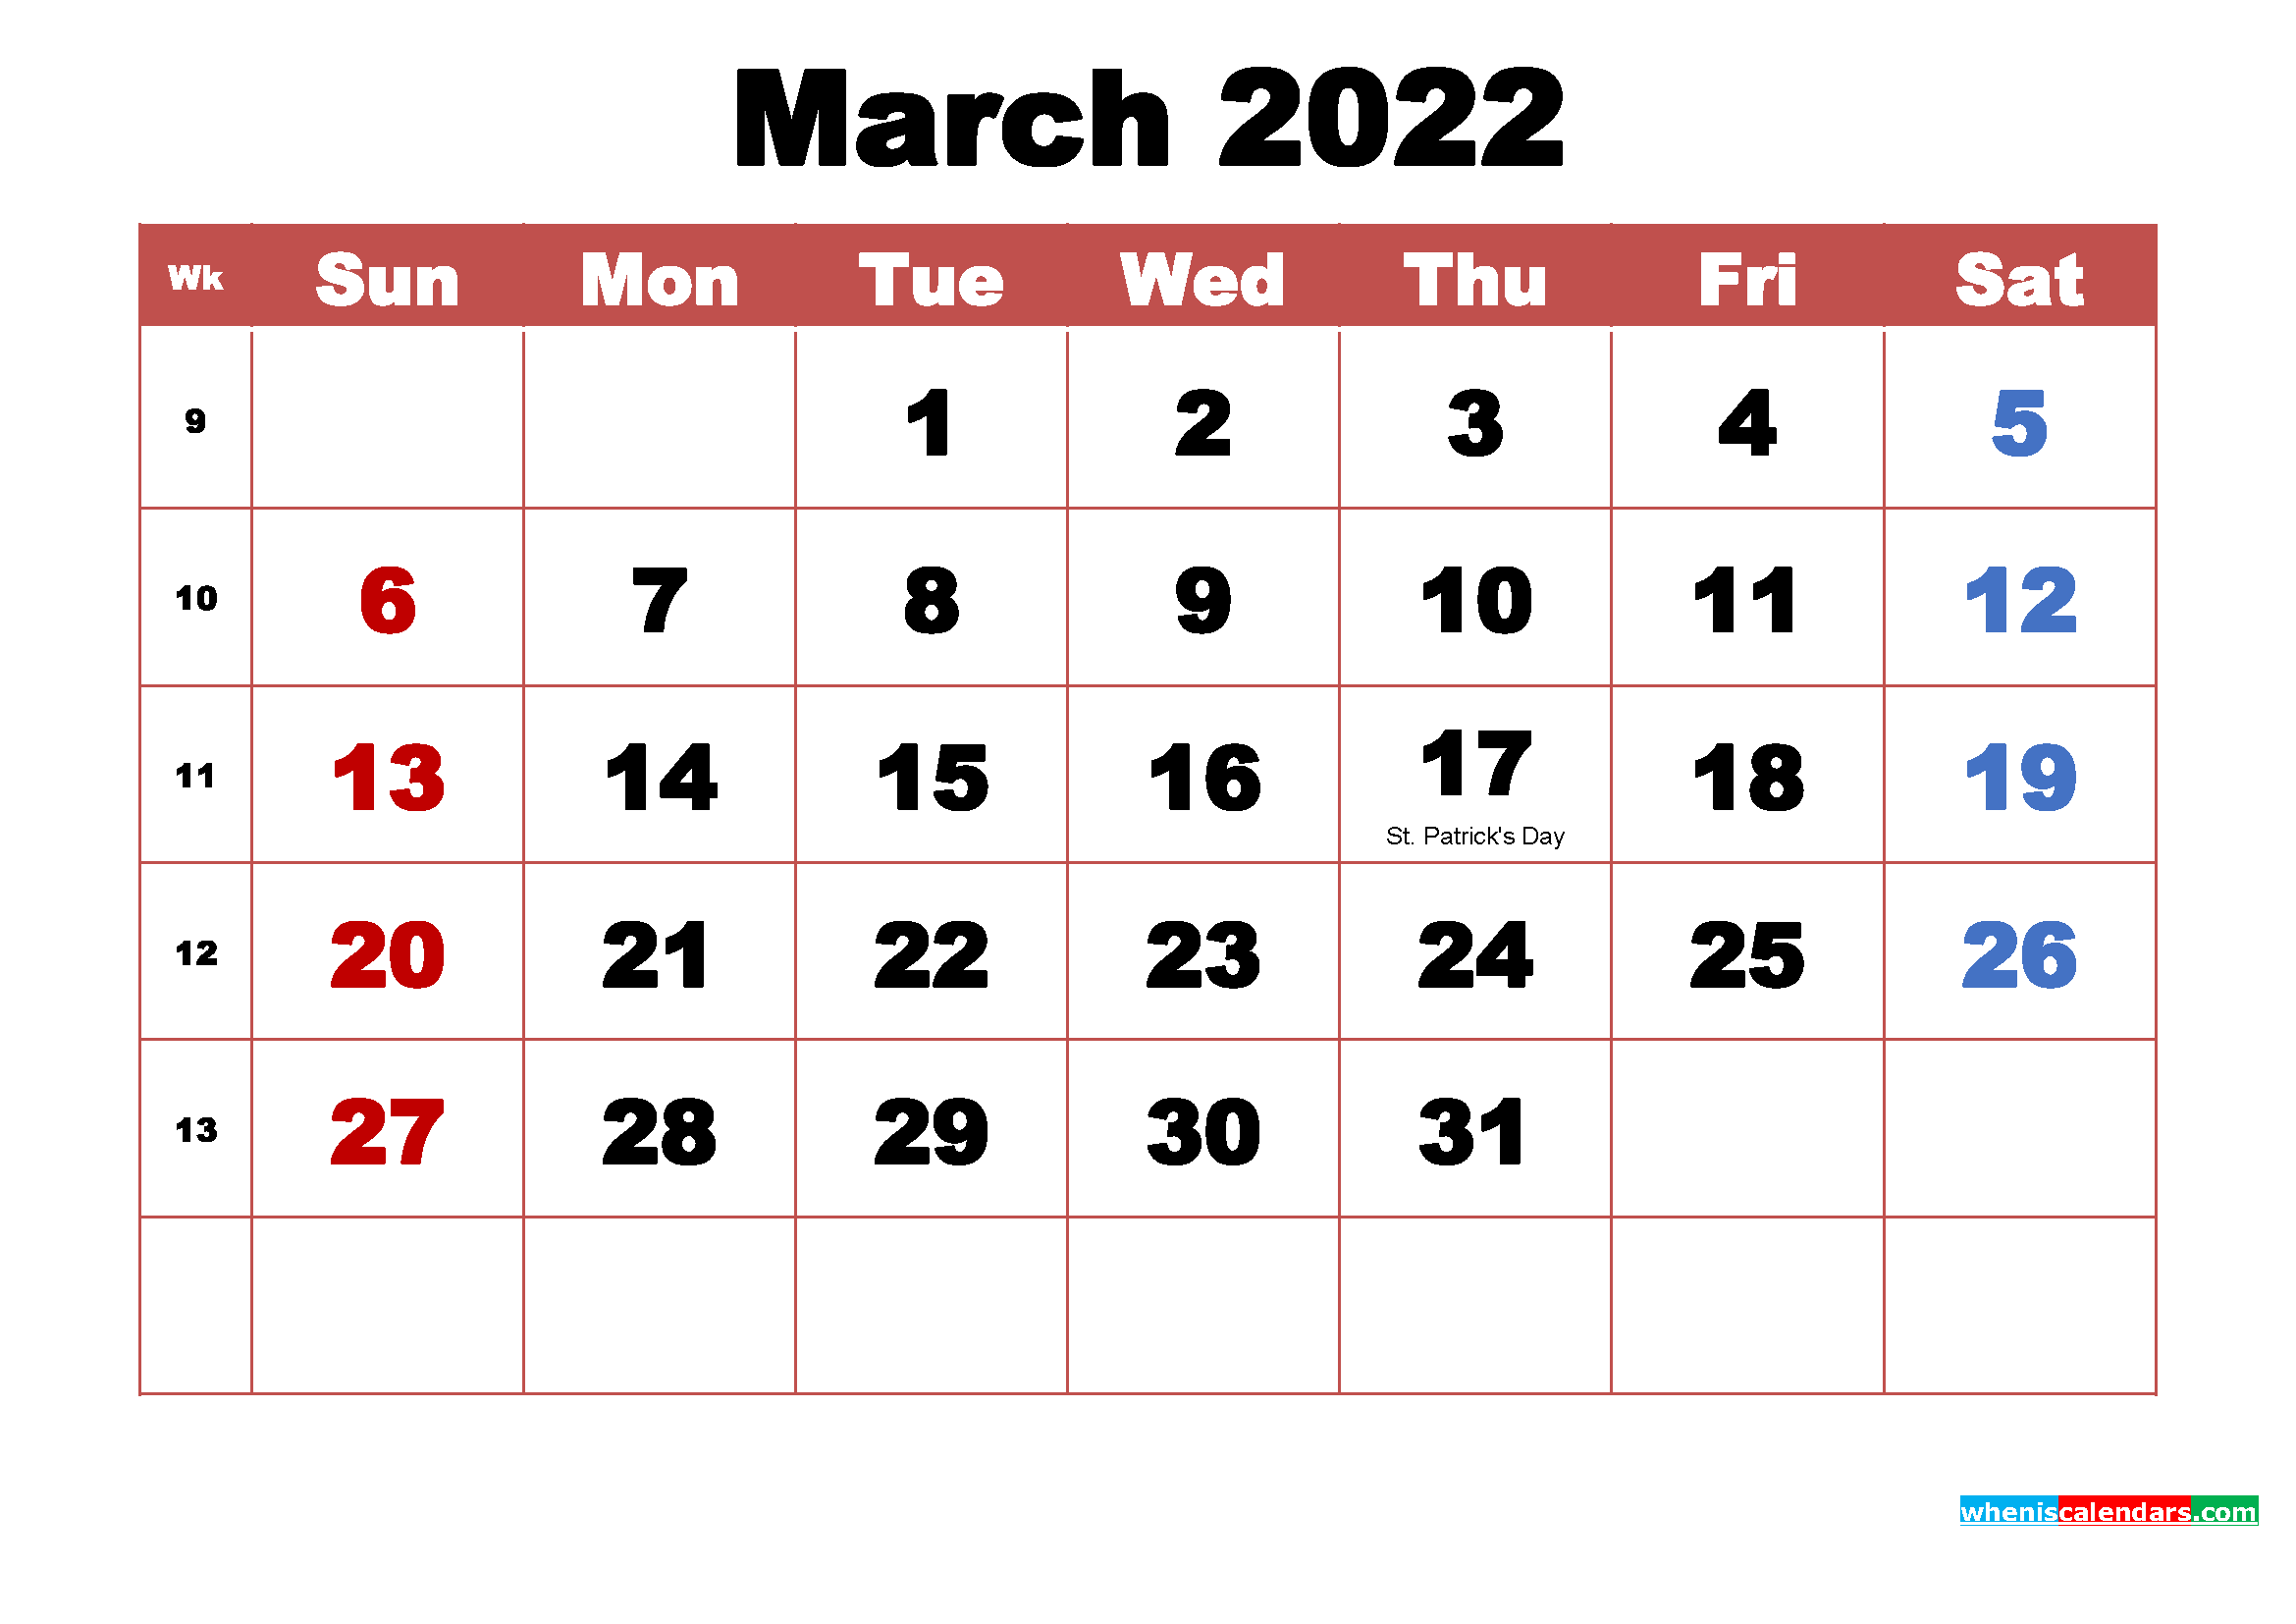 Free download March 2022 Calendar Wallpaper High Resolution 2339x1654